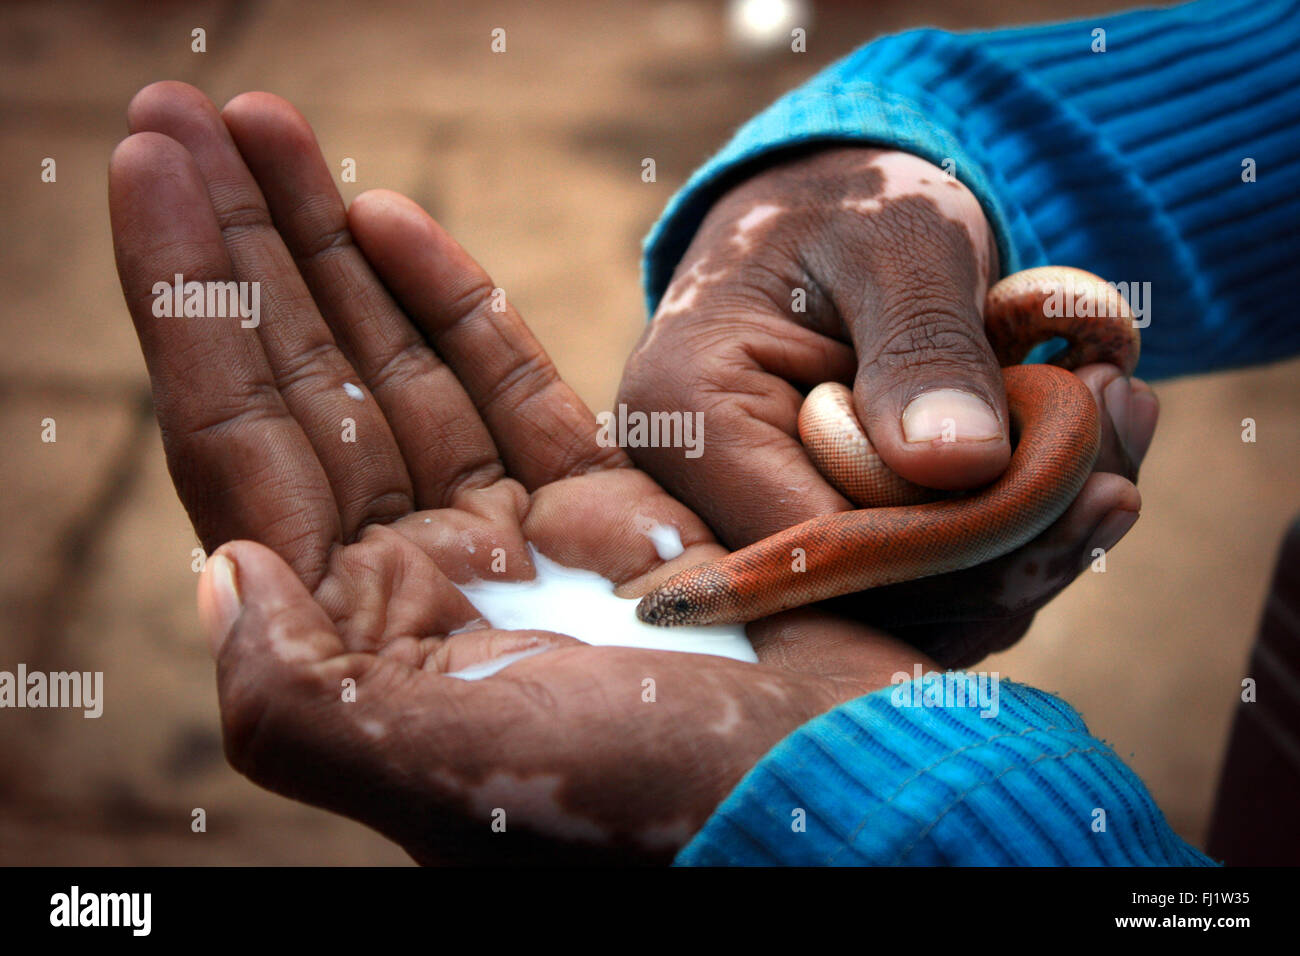 Snake drinking milk in a hand in varanasi, india Stock Photo